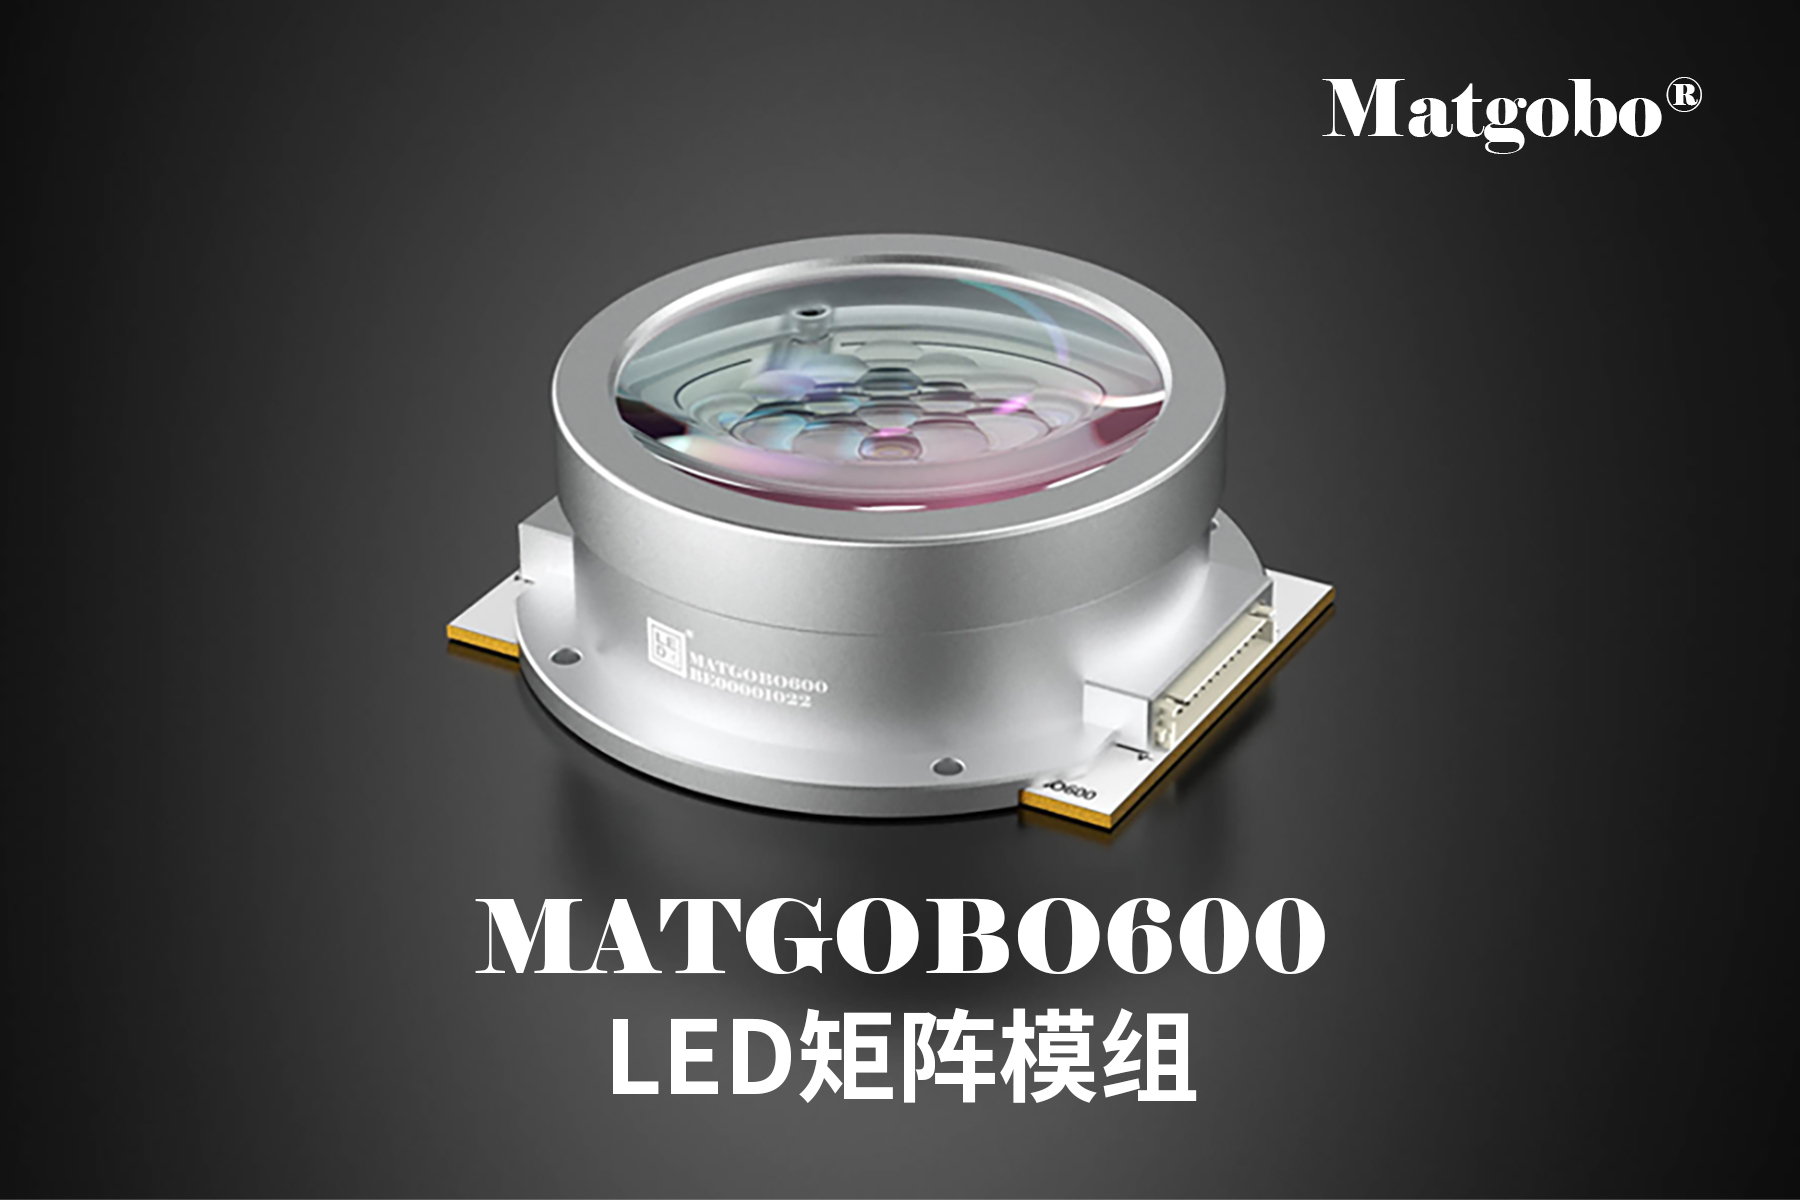 LED矩阵模组MATGOBO600性能升级